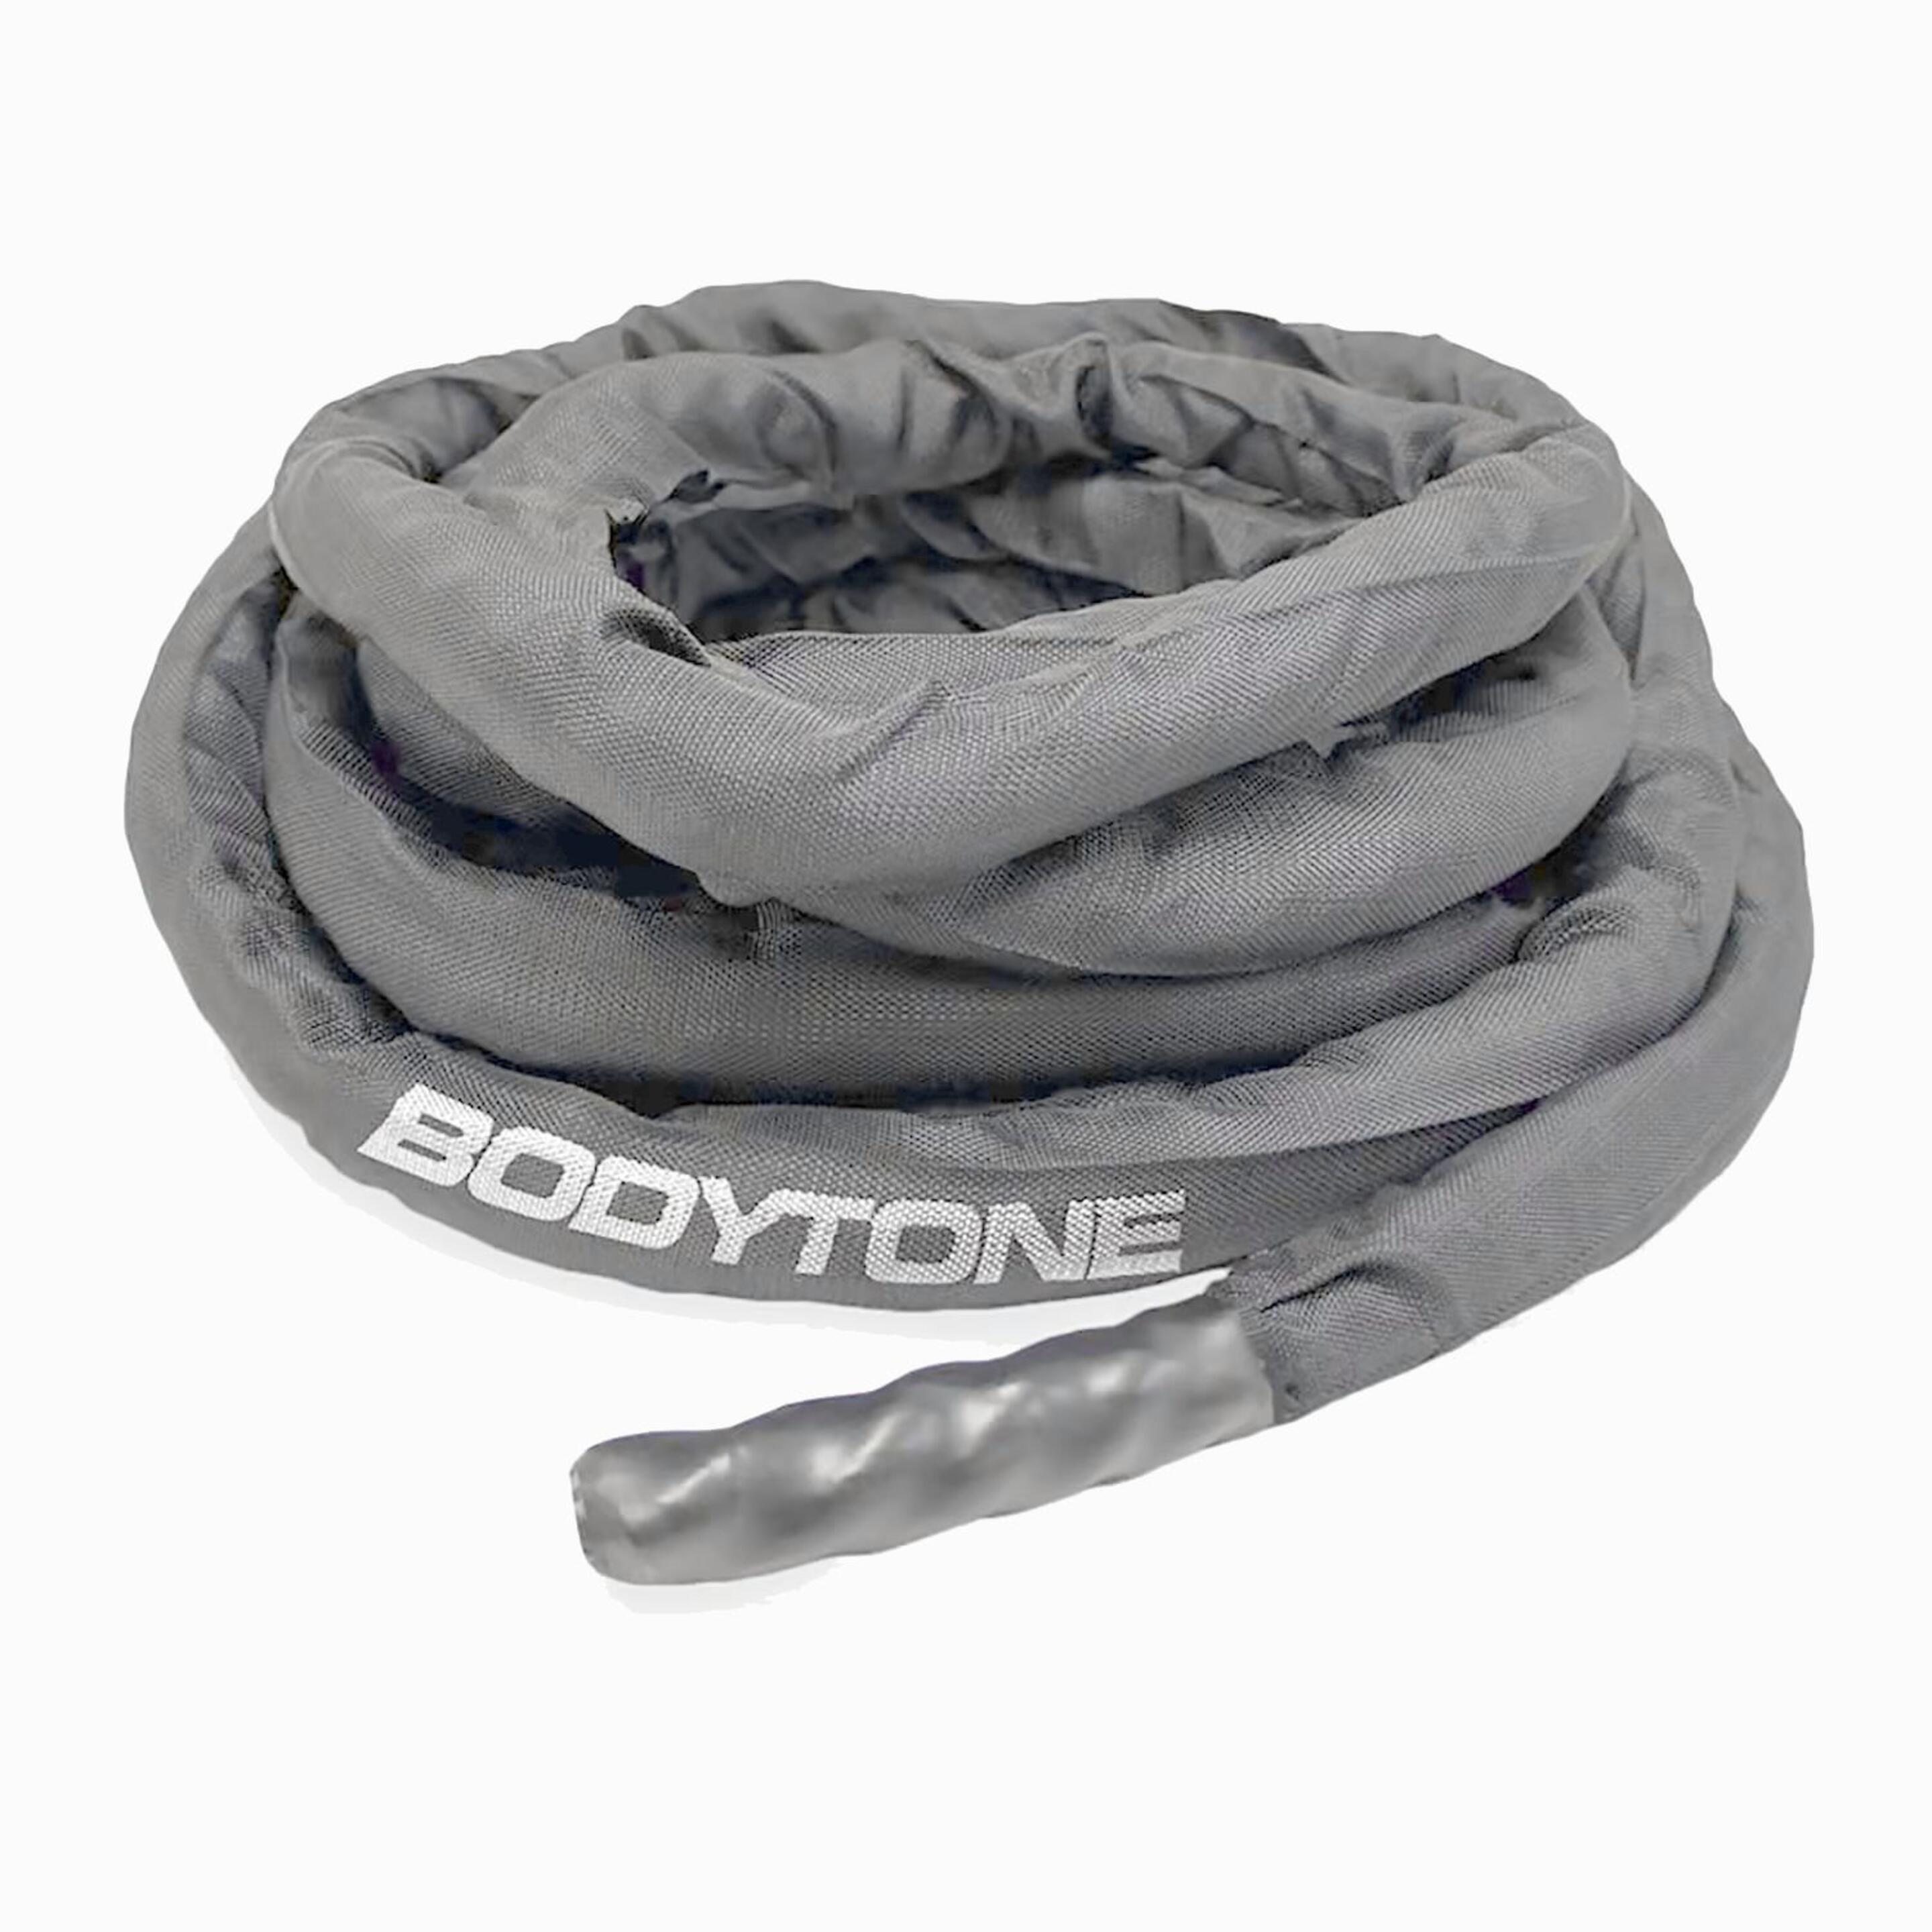 Corda Bodytone - negro - 